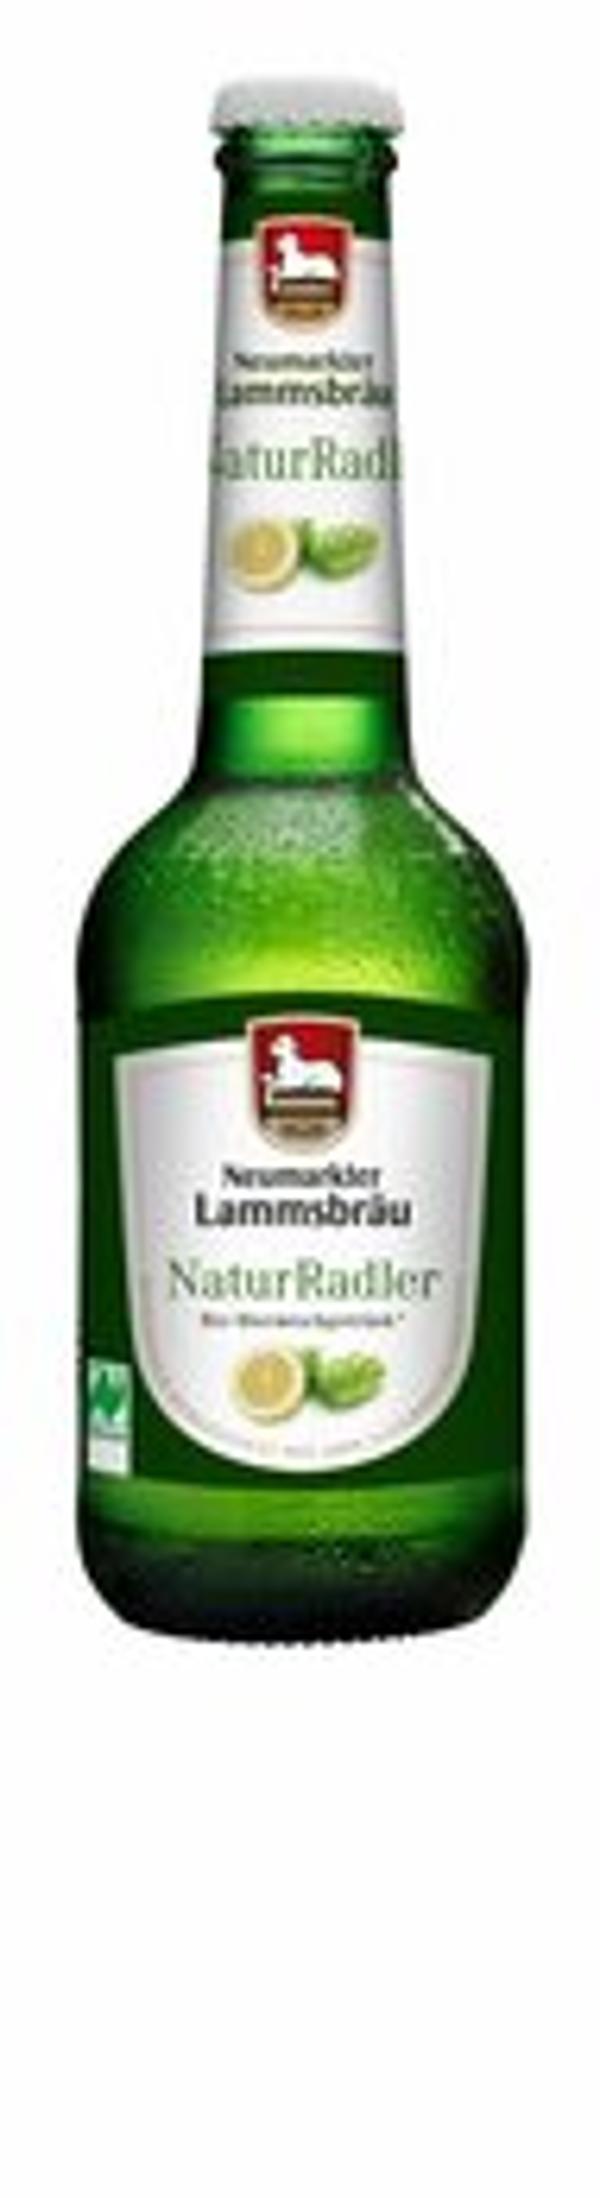 Produktfoto zu Kiste Lammsbräu NaturRadler (10 x 0,33l)